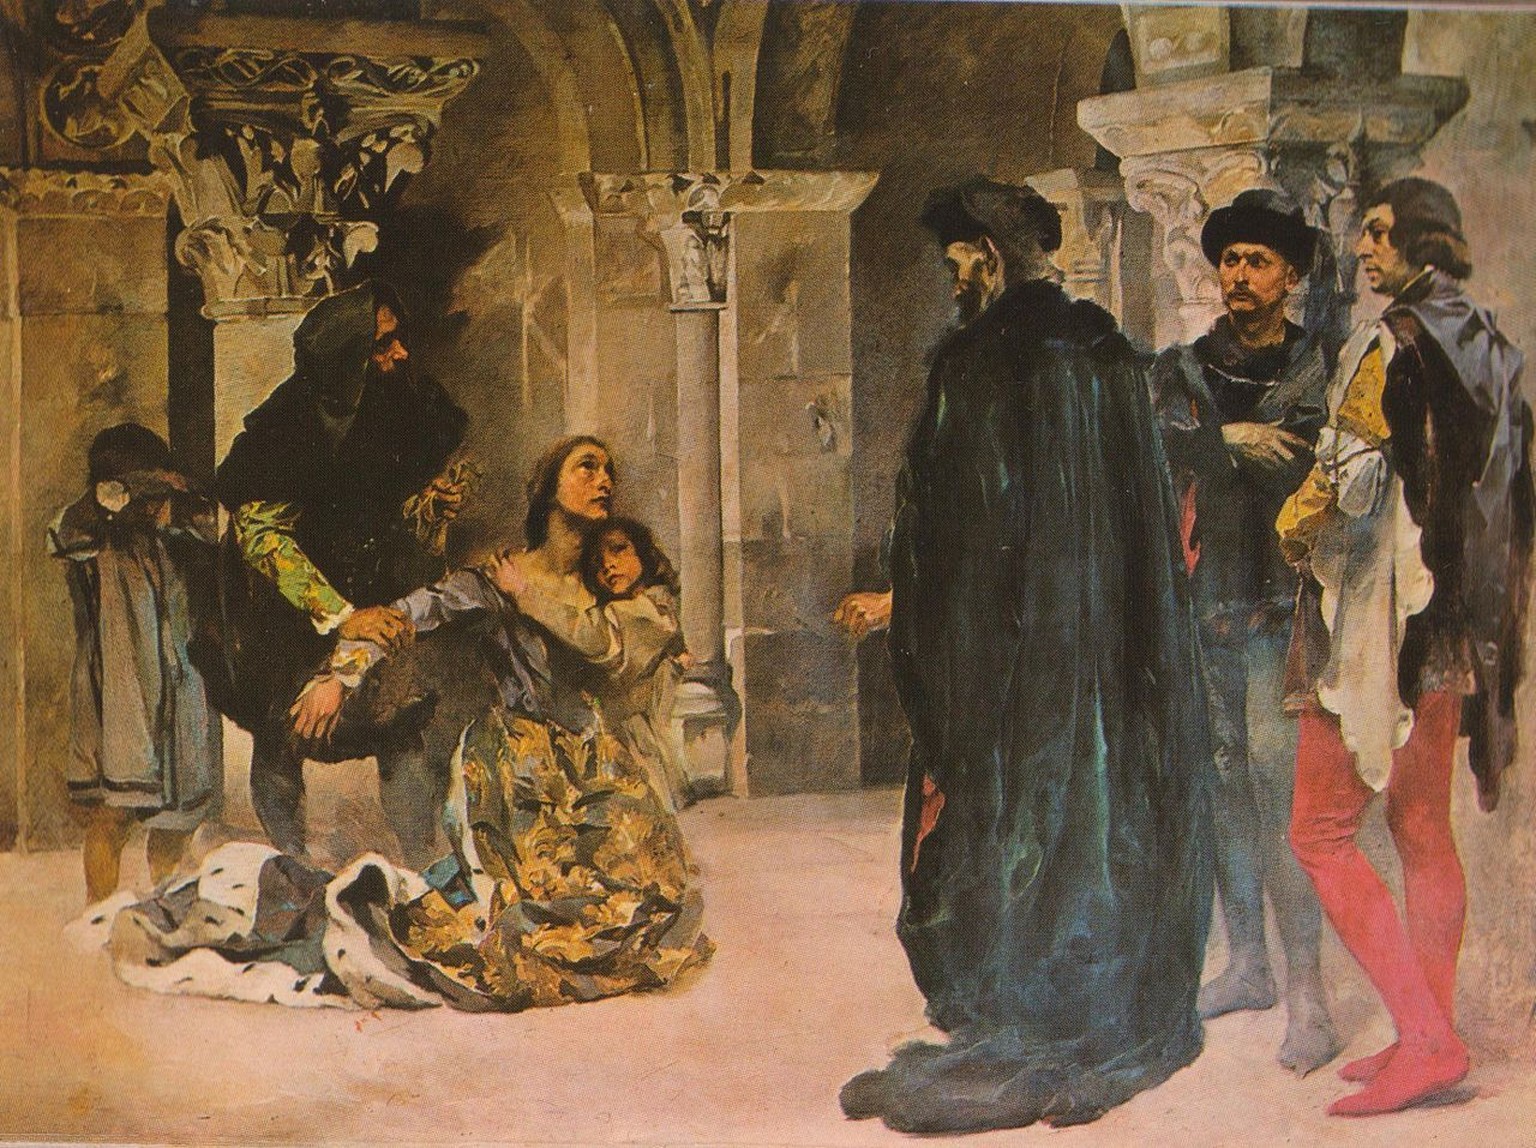 Der Mord an Ines de Castro, Gemälde von Columbano Bordalo Pinheiro, um 1902. Nach der Überlieferung handelte es sich bei den Mördern um Pedro Coelho, Alvaro Gonçalves, und Diogo Lopes Pacheco.